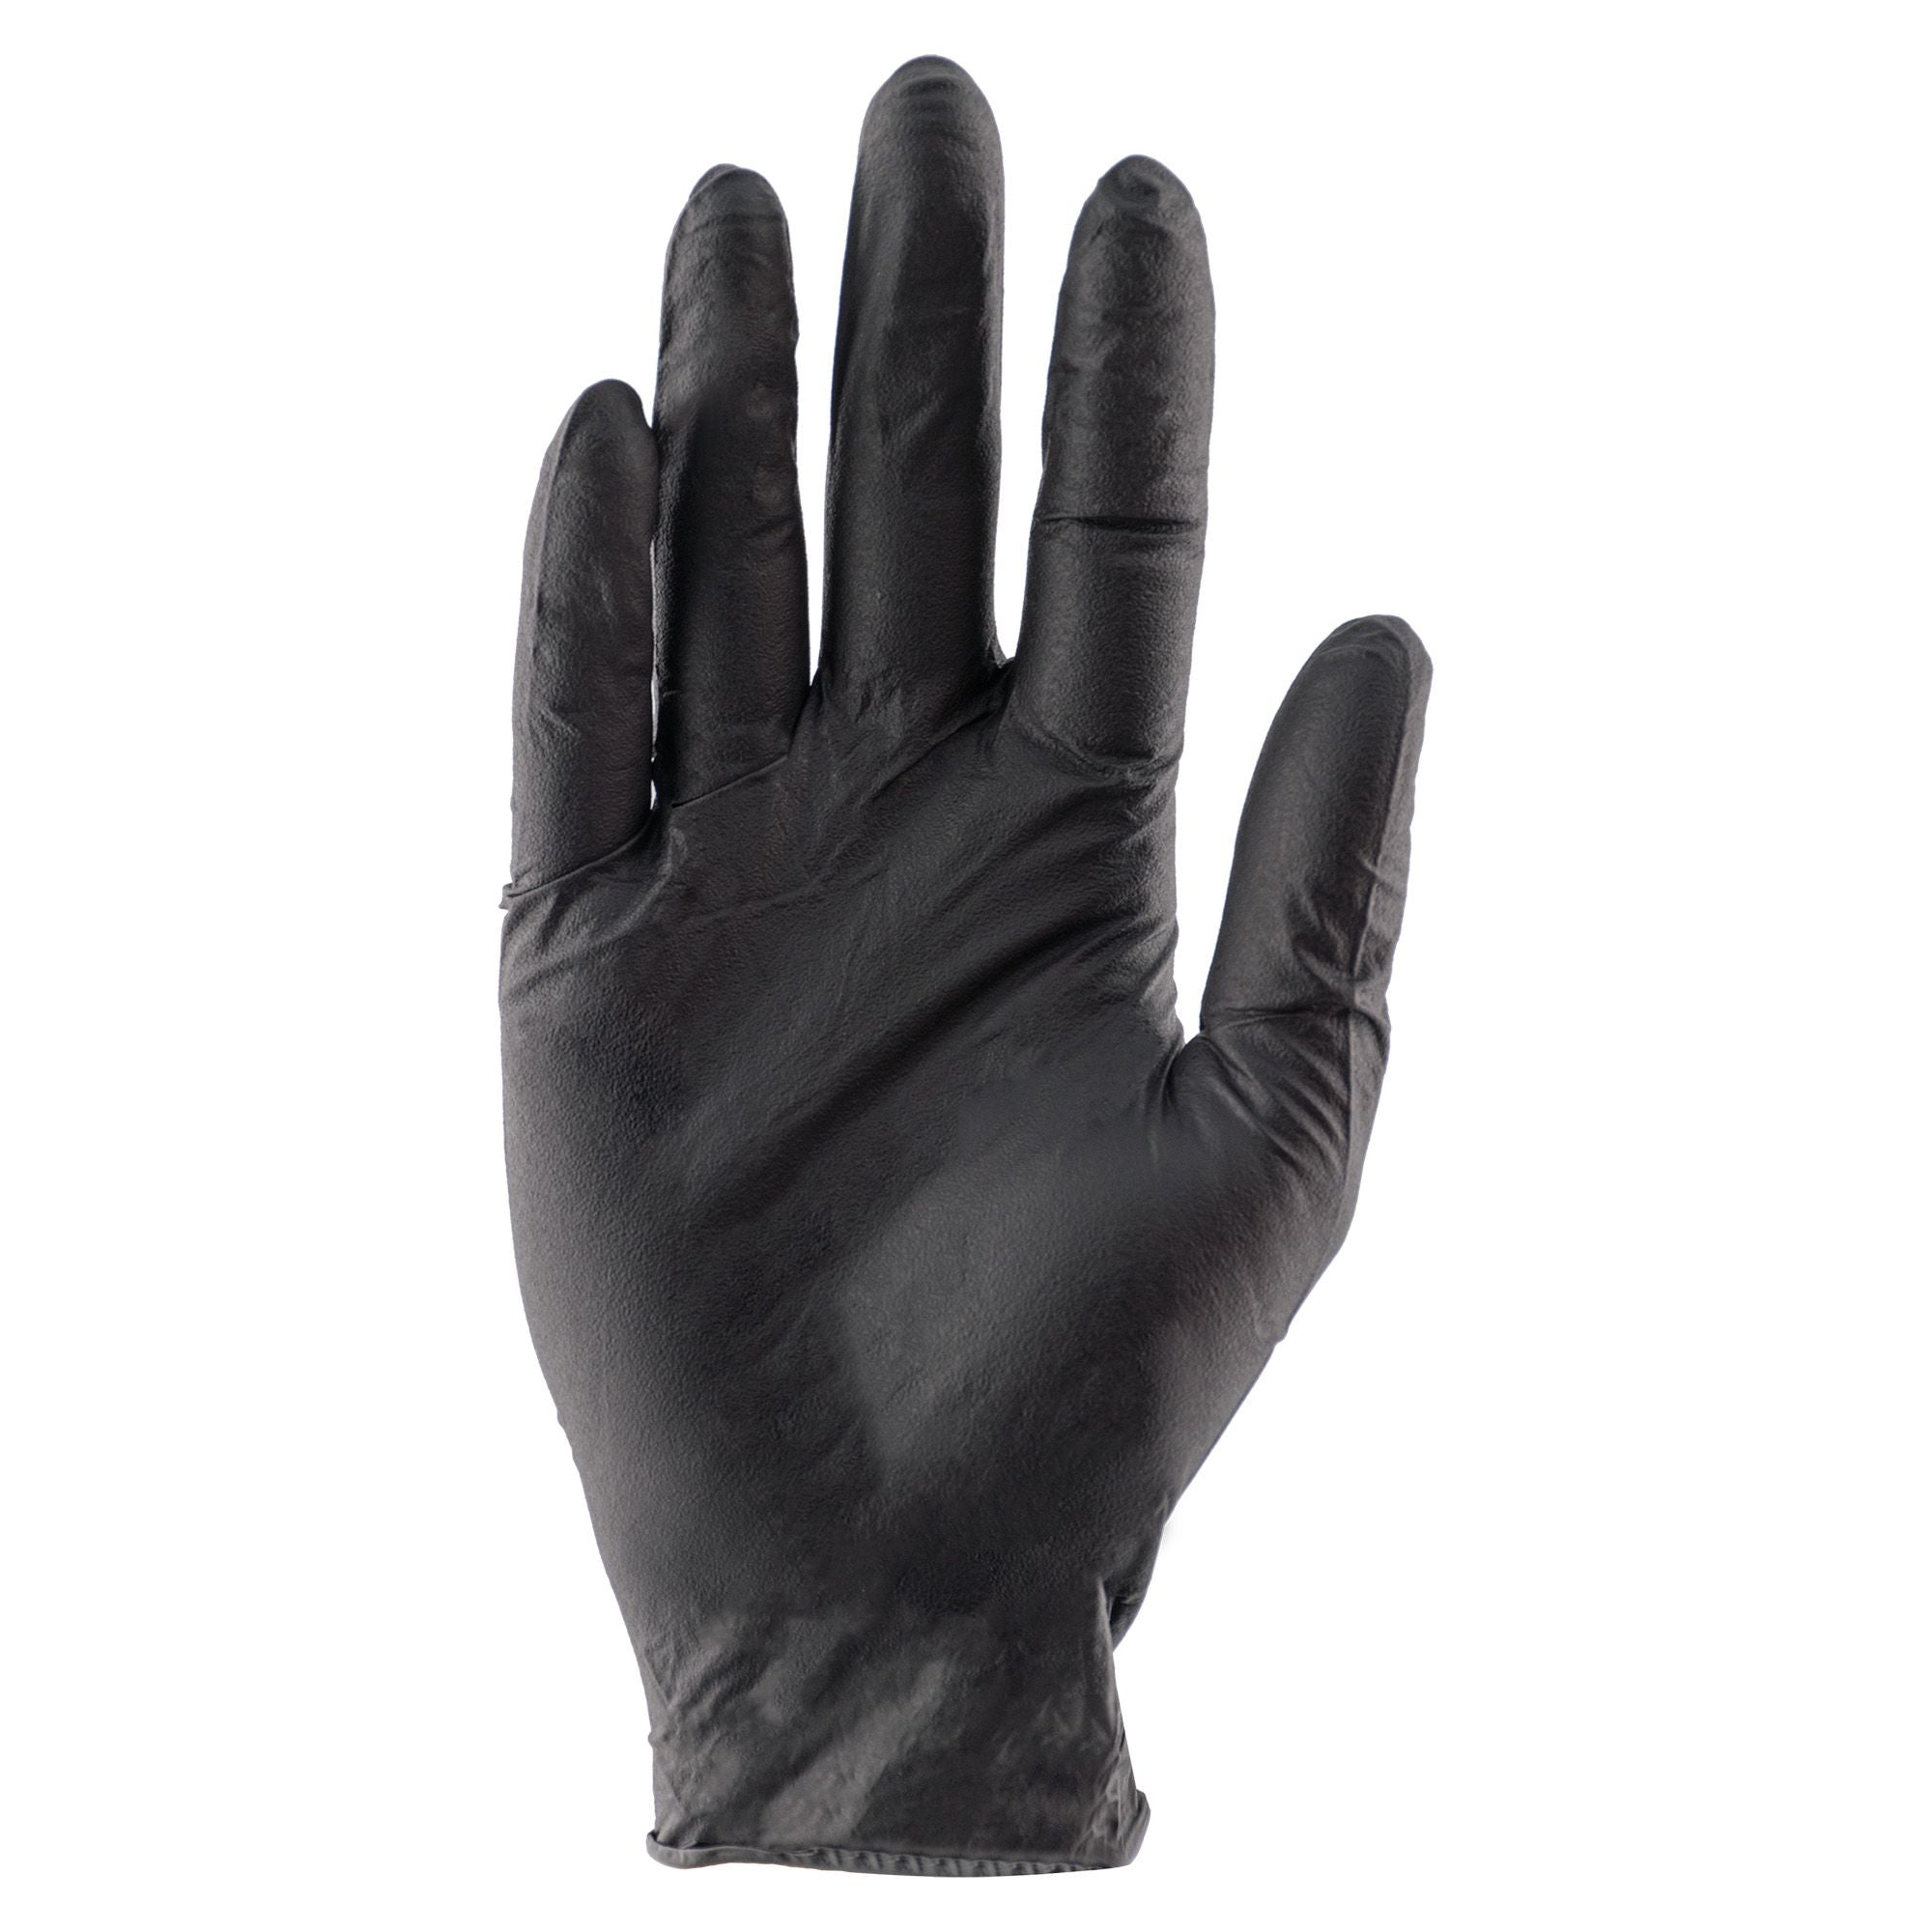 Horizon Black Extra Strong 6-mil Nitrile Disposable Powder-Free Work Gloves - Box of 100